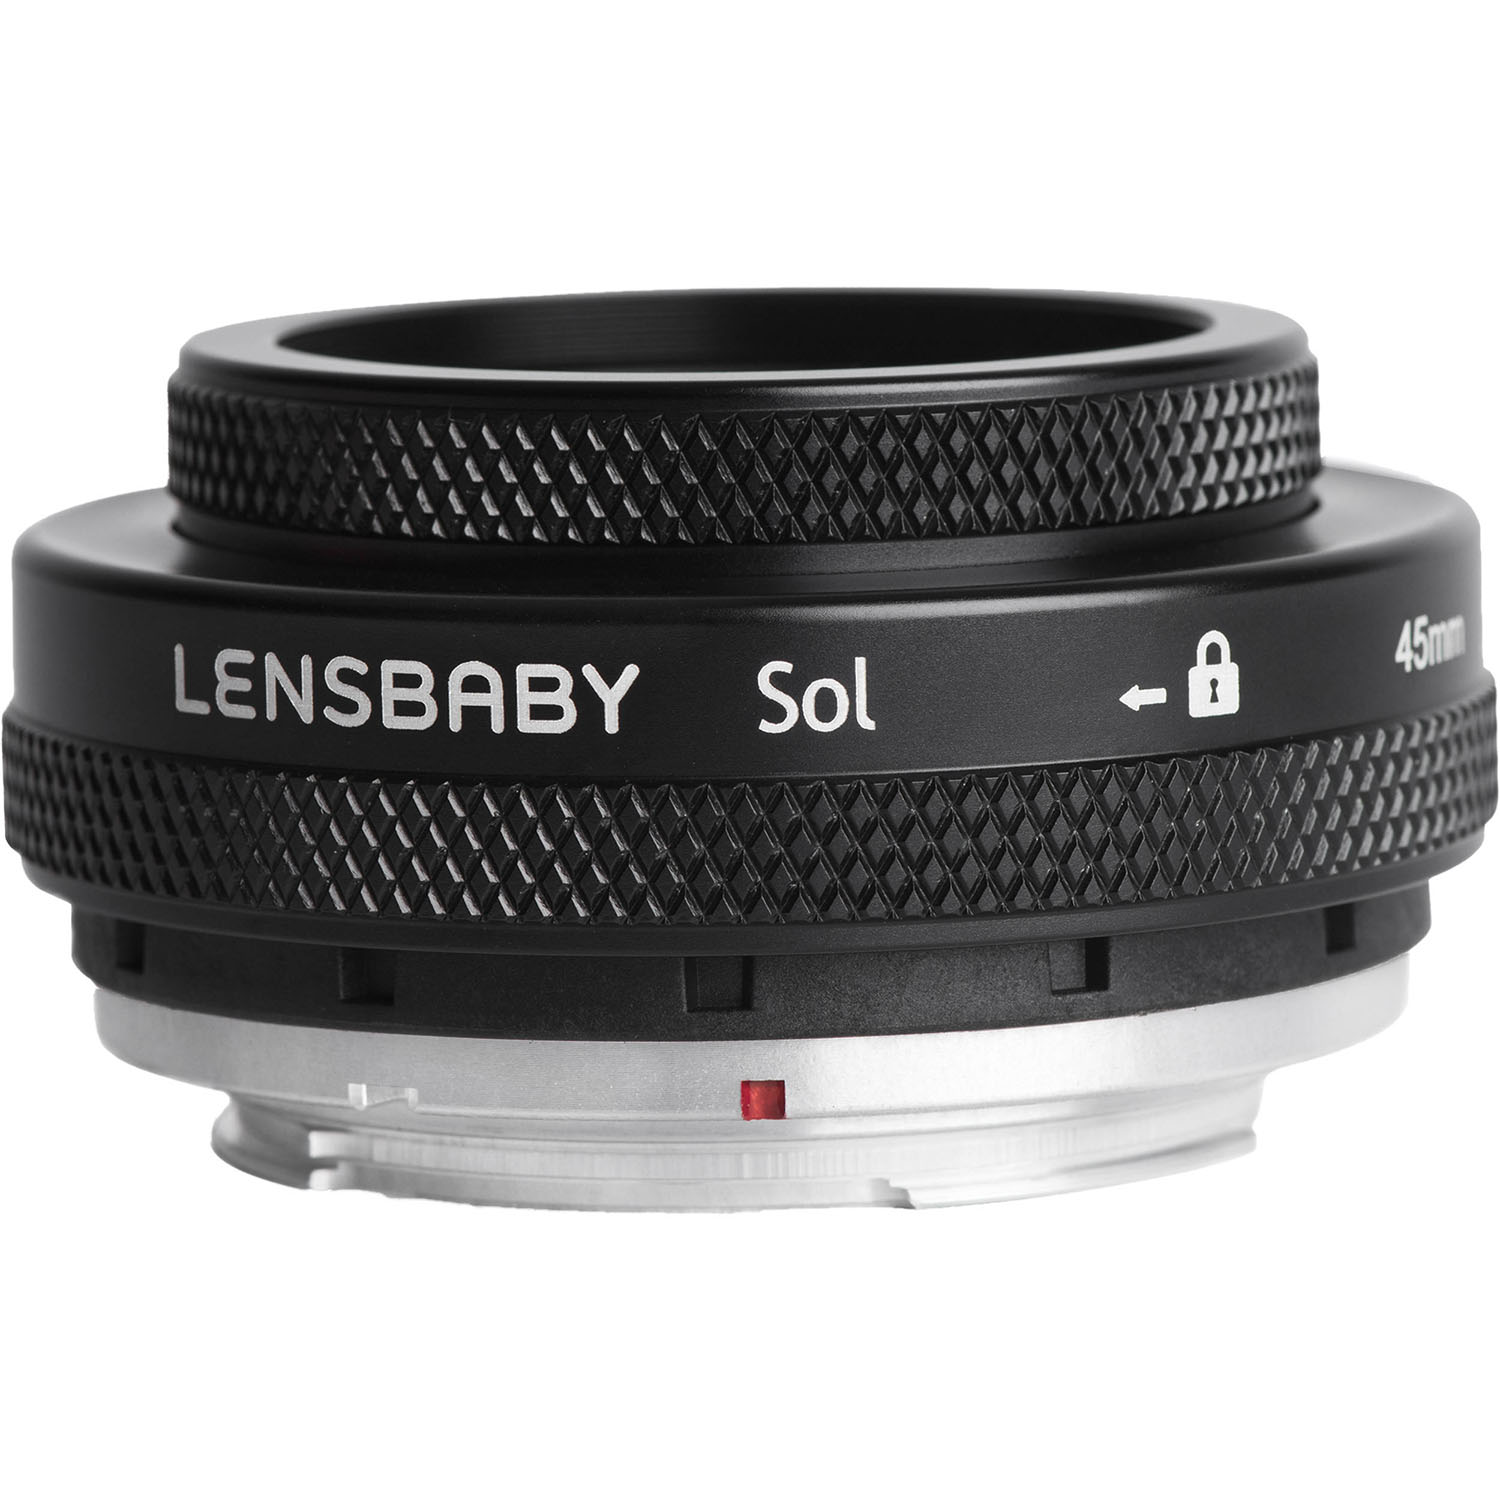 Lensbaby Sol 45mm Lens Tampa FL